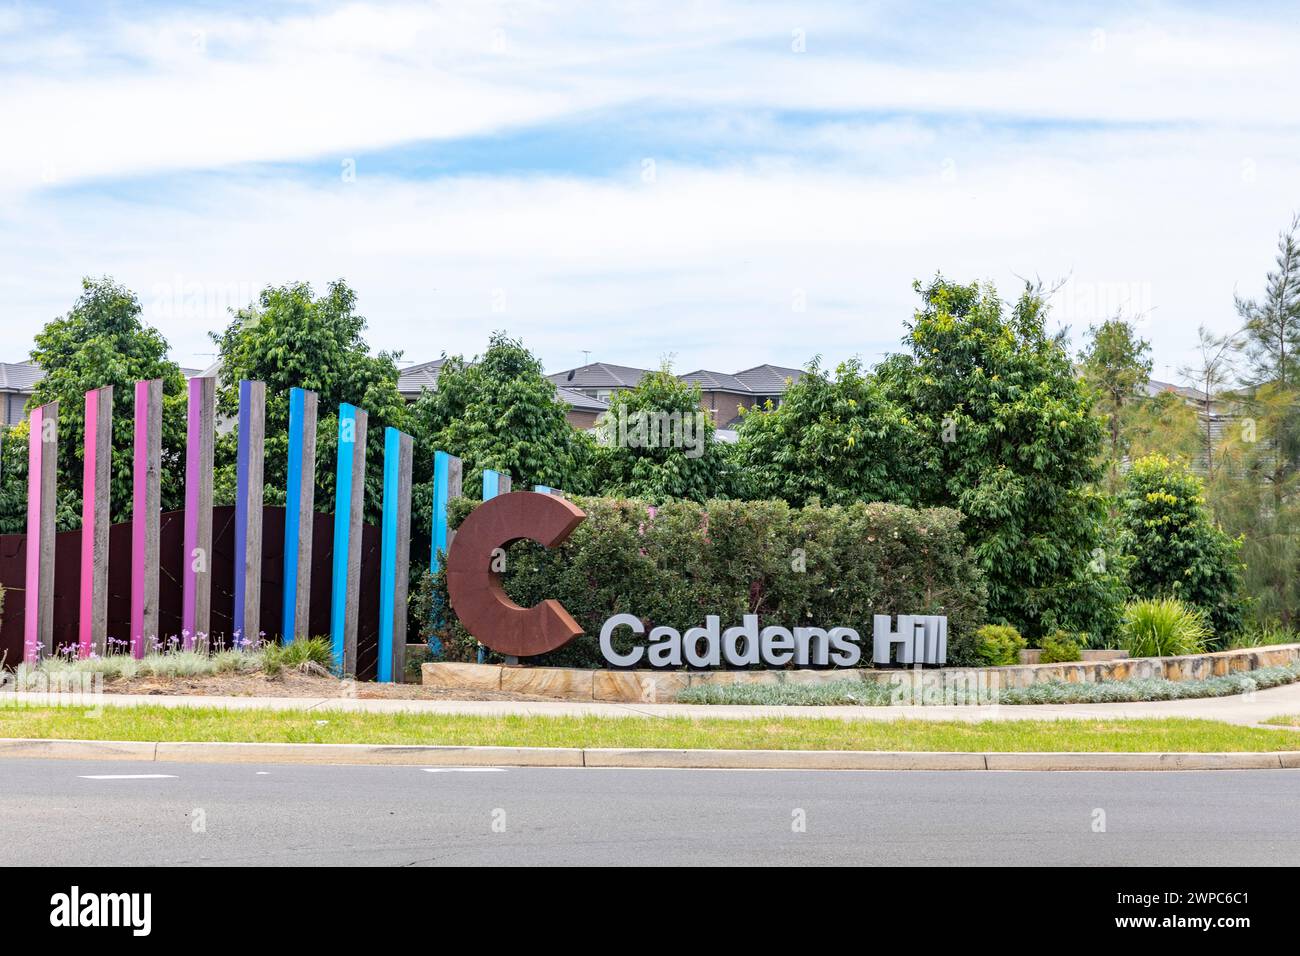 New residential neighbourhood, Caddens, in western Sydney Penrith area, sign for Caddens hill development,Sydney,NSW,Australia Stock Photo